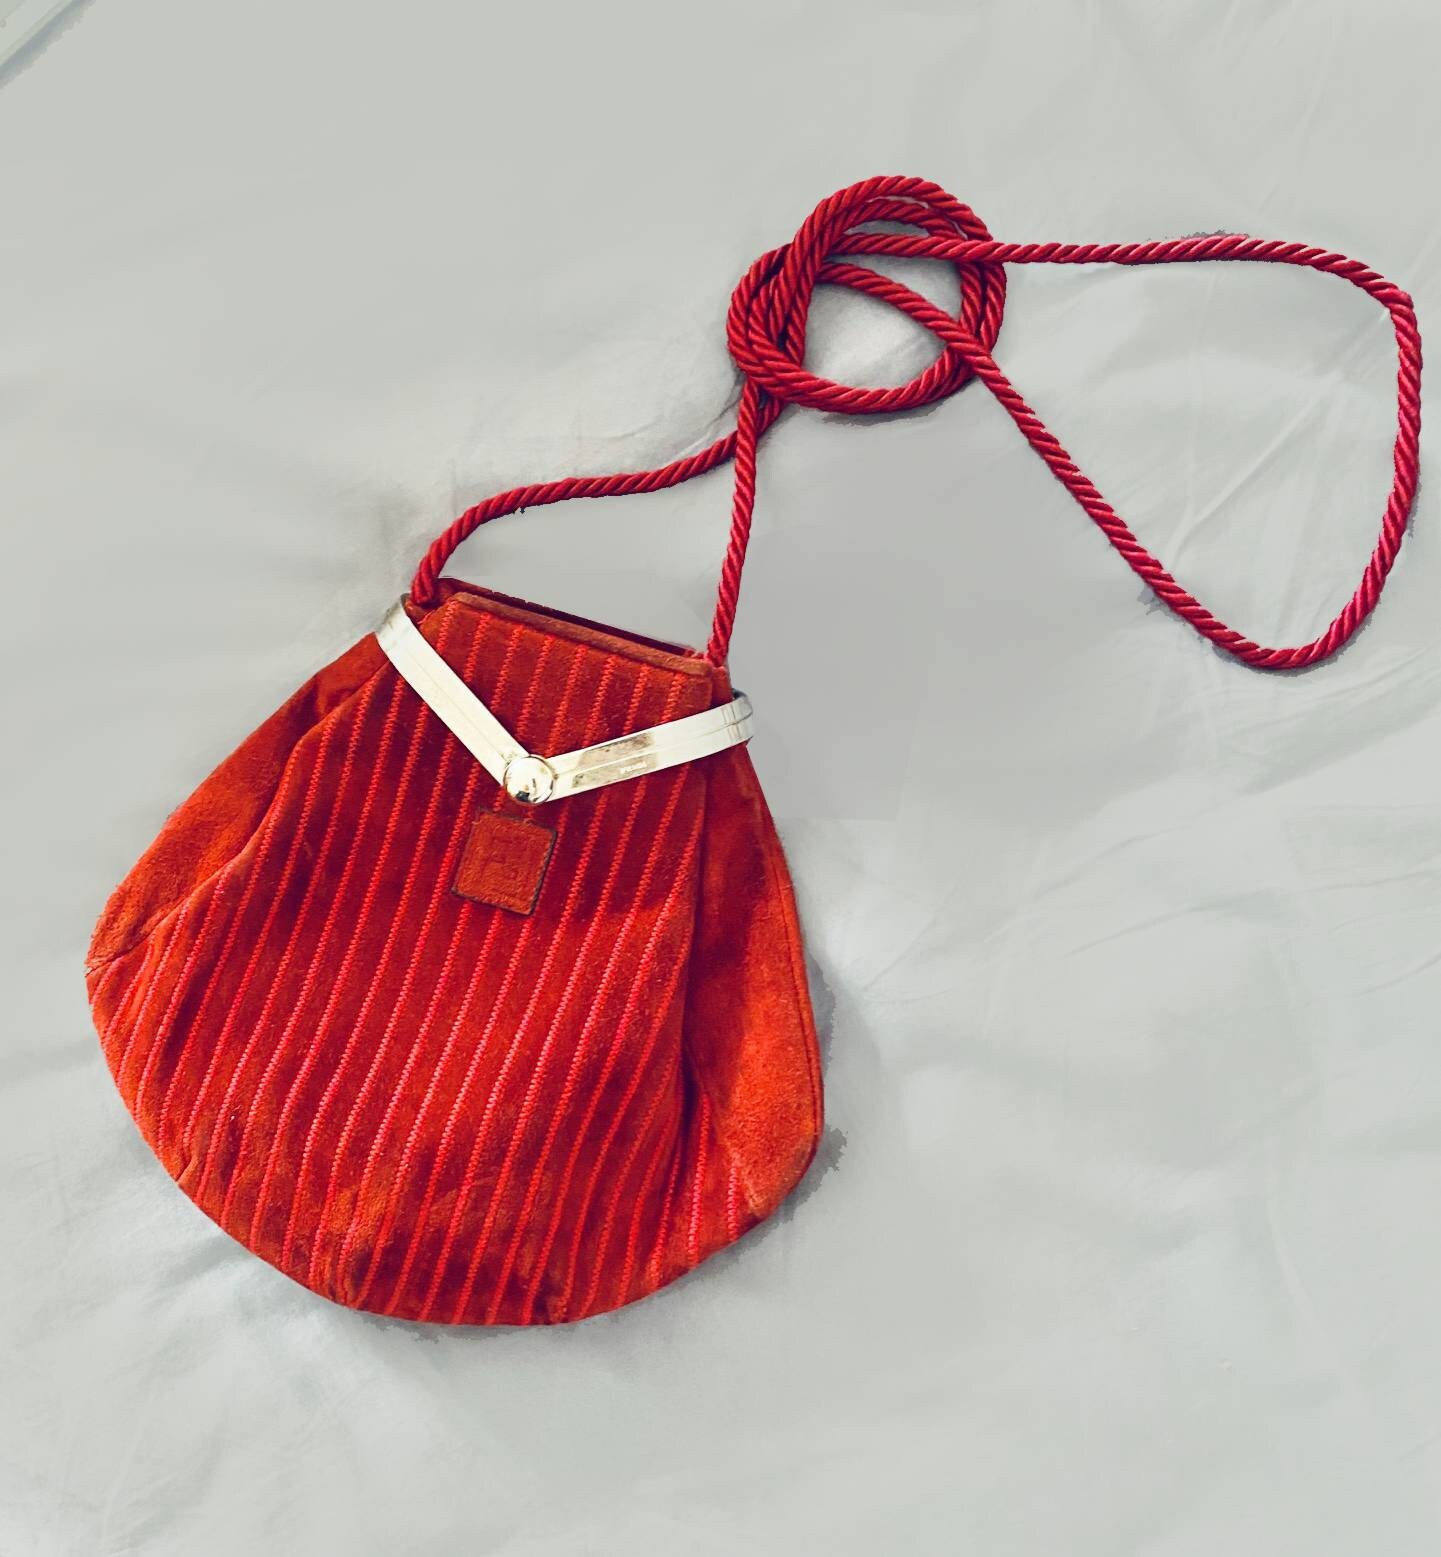 FENDI Vintage Fendi Red Glossy Faux Fur & Leather Tote Bag-1970s-80s